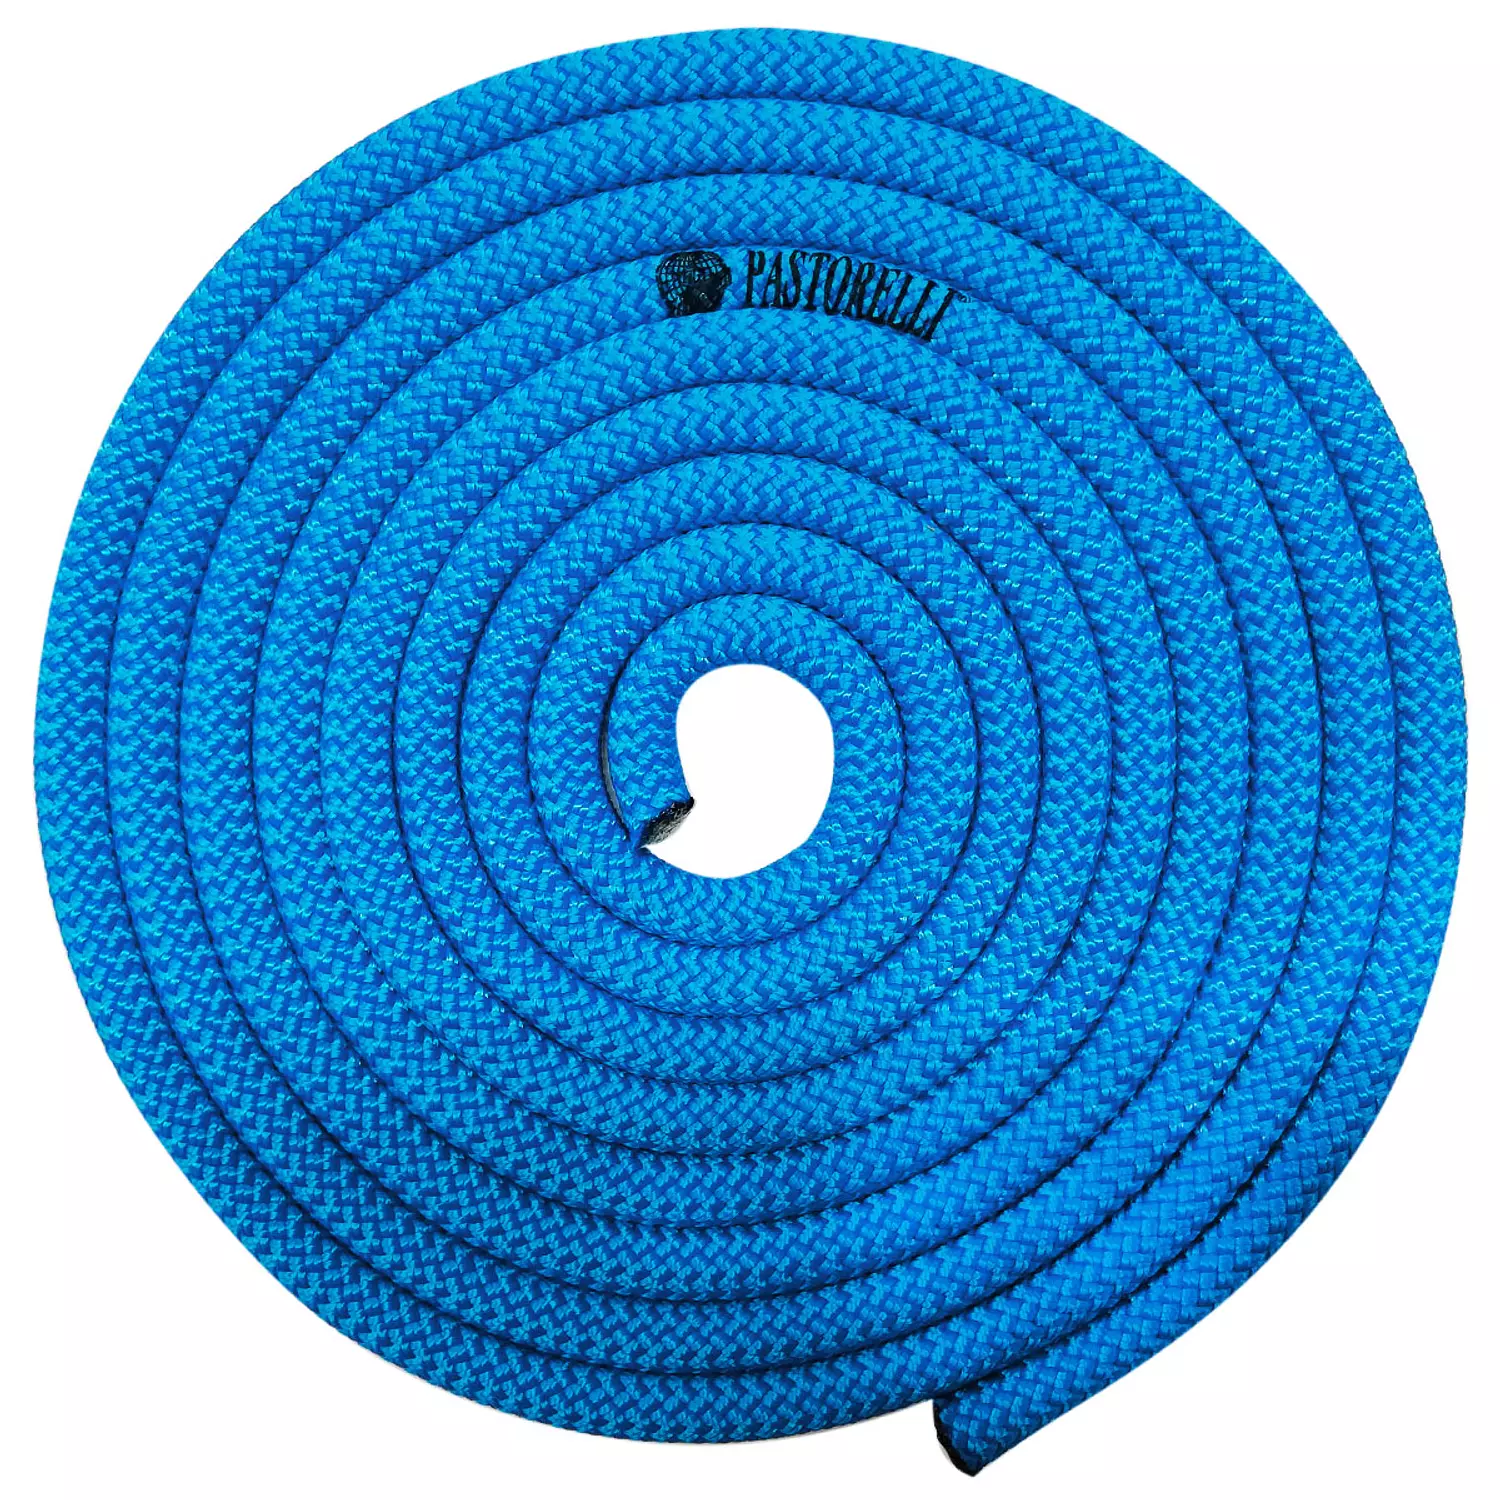 Pastorelli-New Orleans monochromatic rope FIG 3m 2